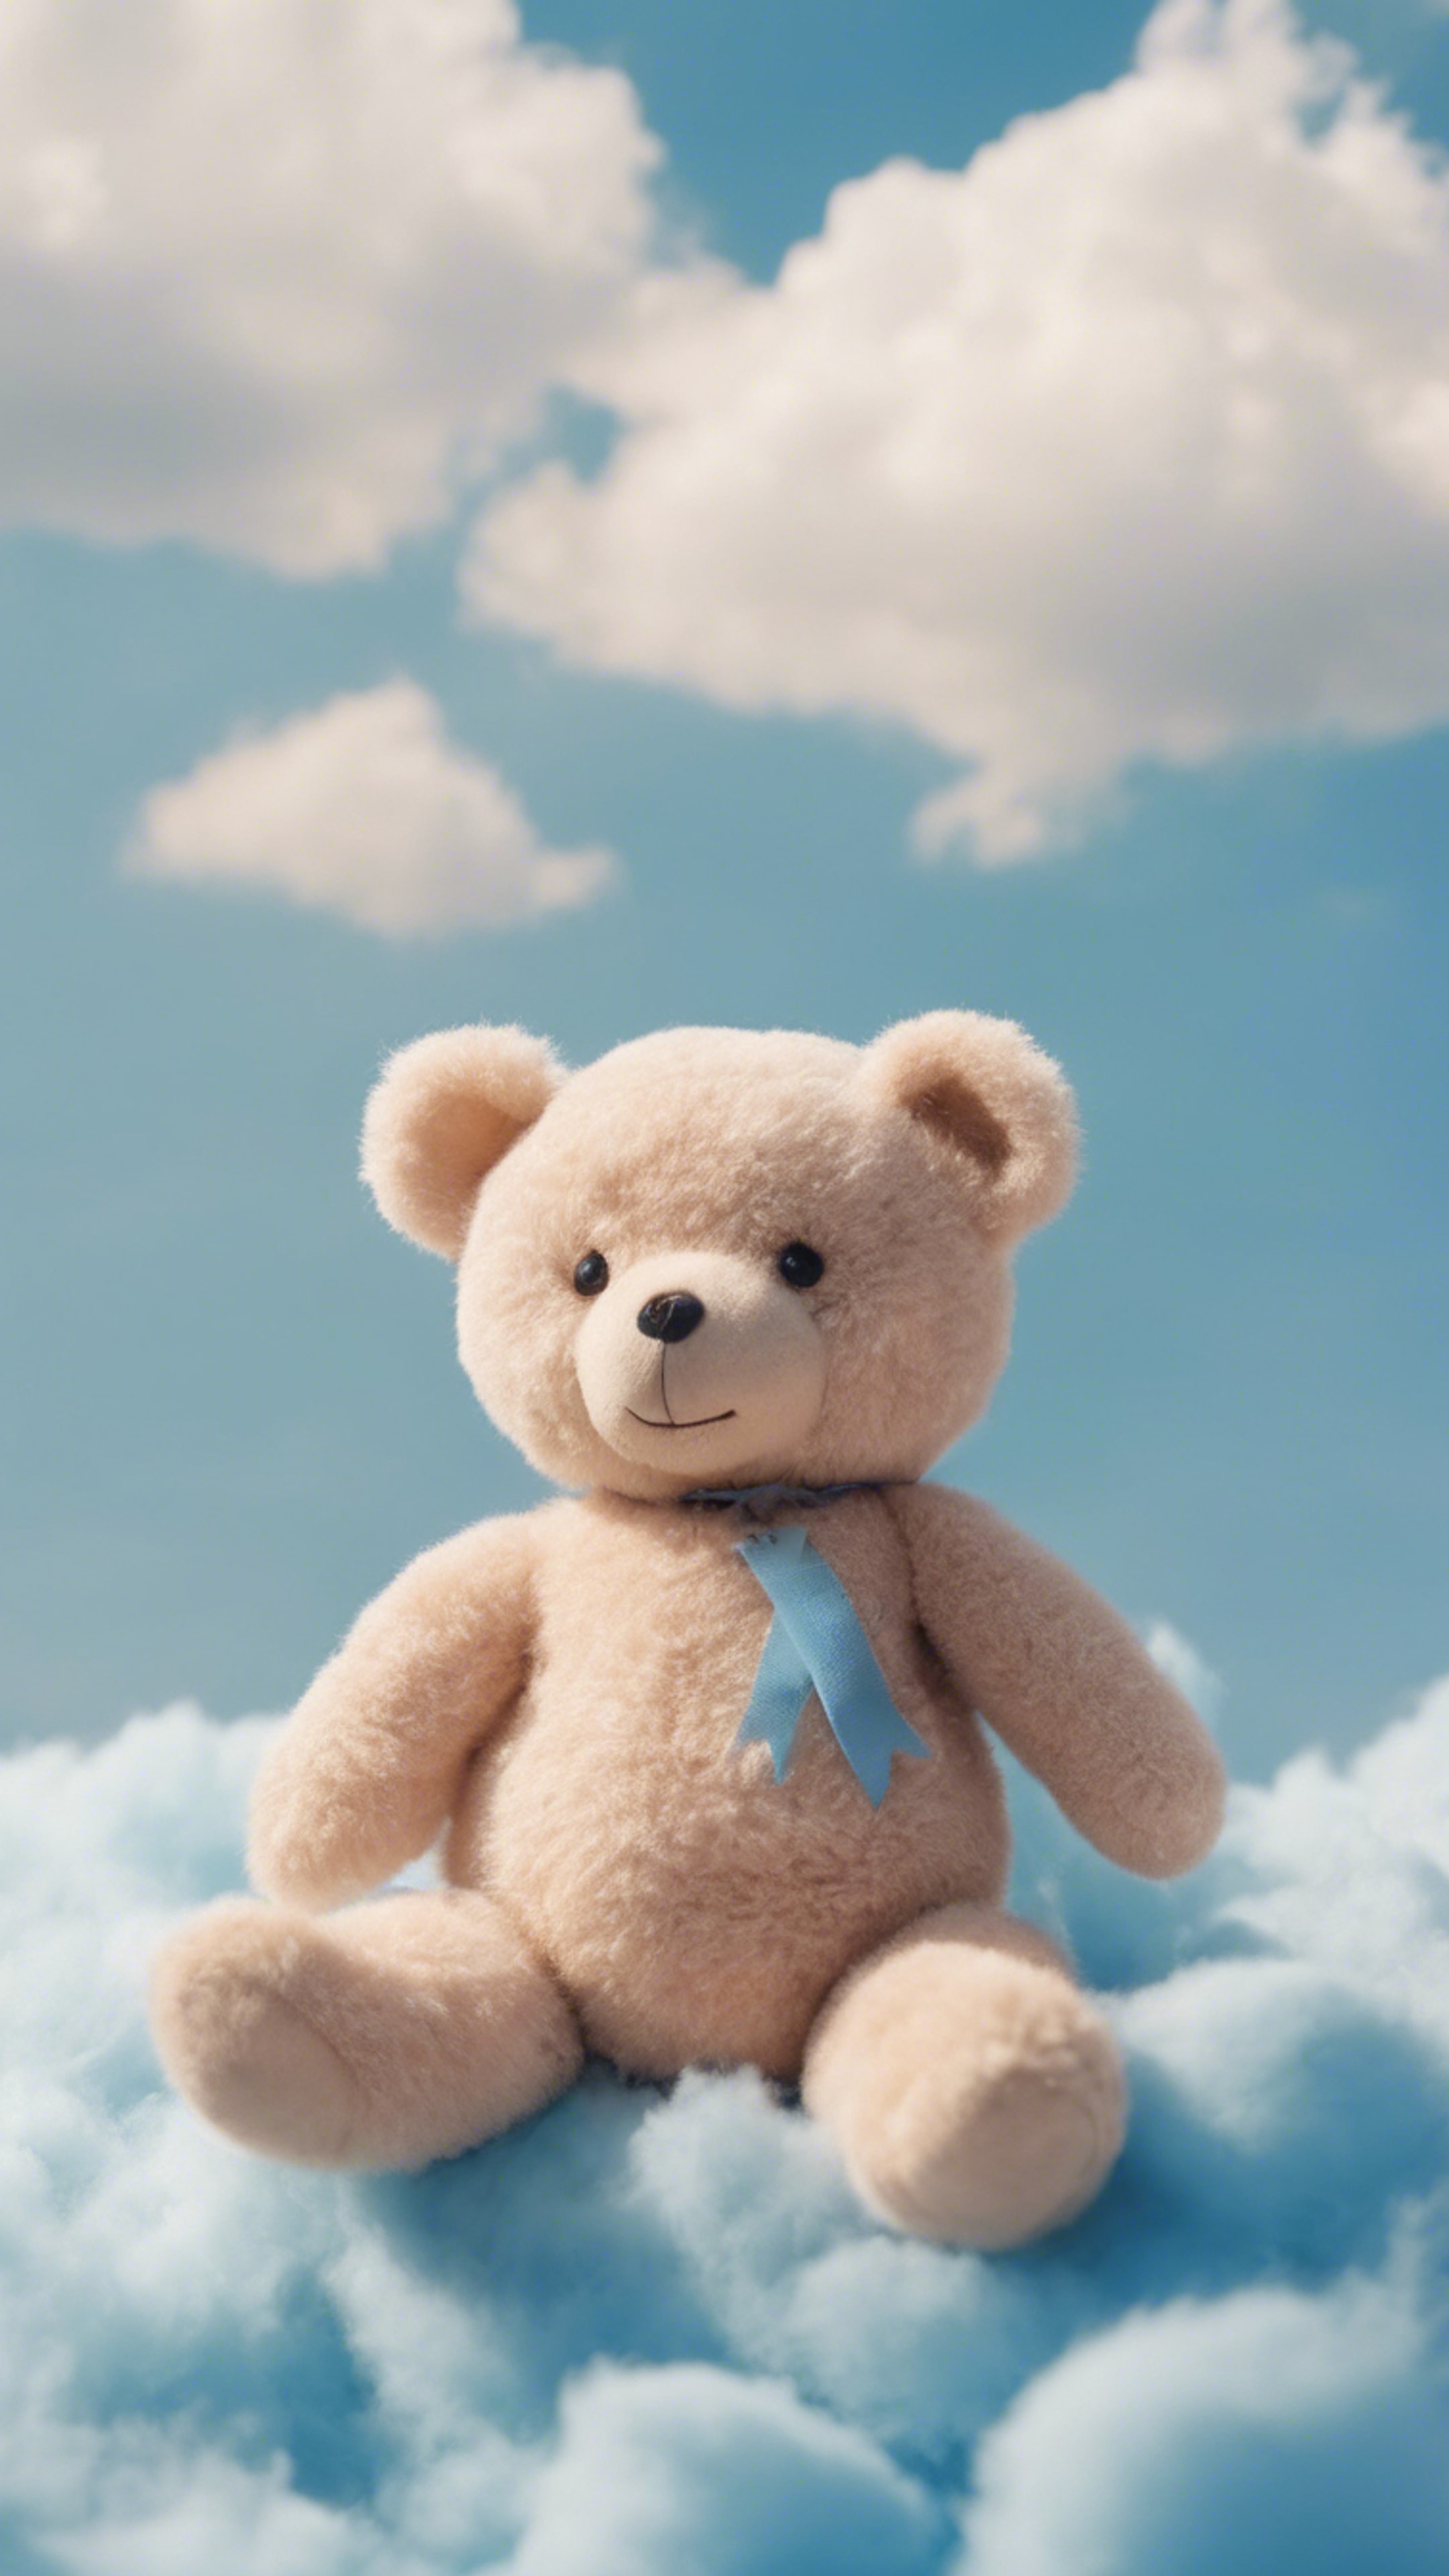 A kawaii beige teddy bear sitting on a soft fluffy cloud in a blue sky. Papel de parede[56112c47d15a43519872]